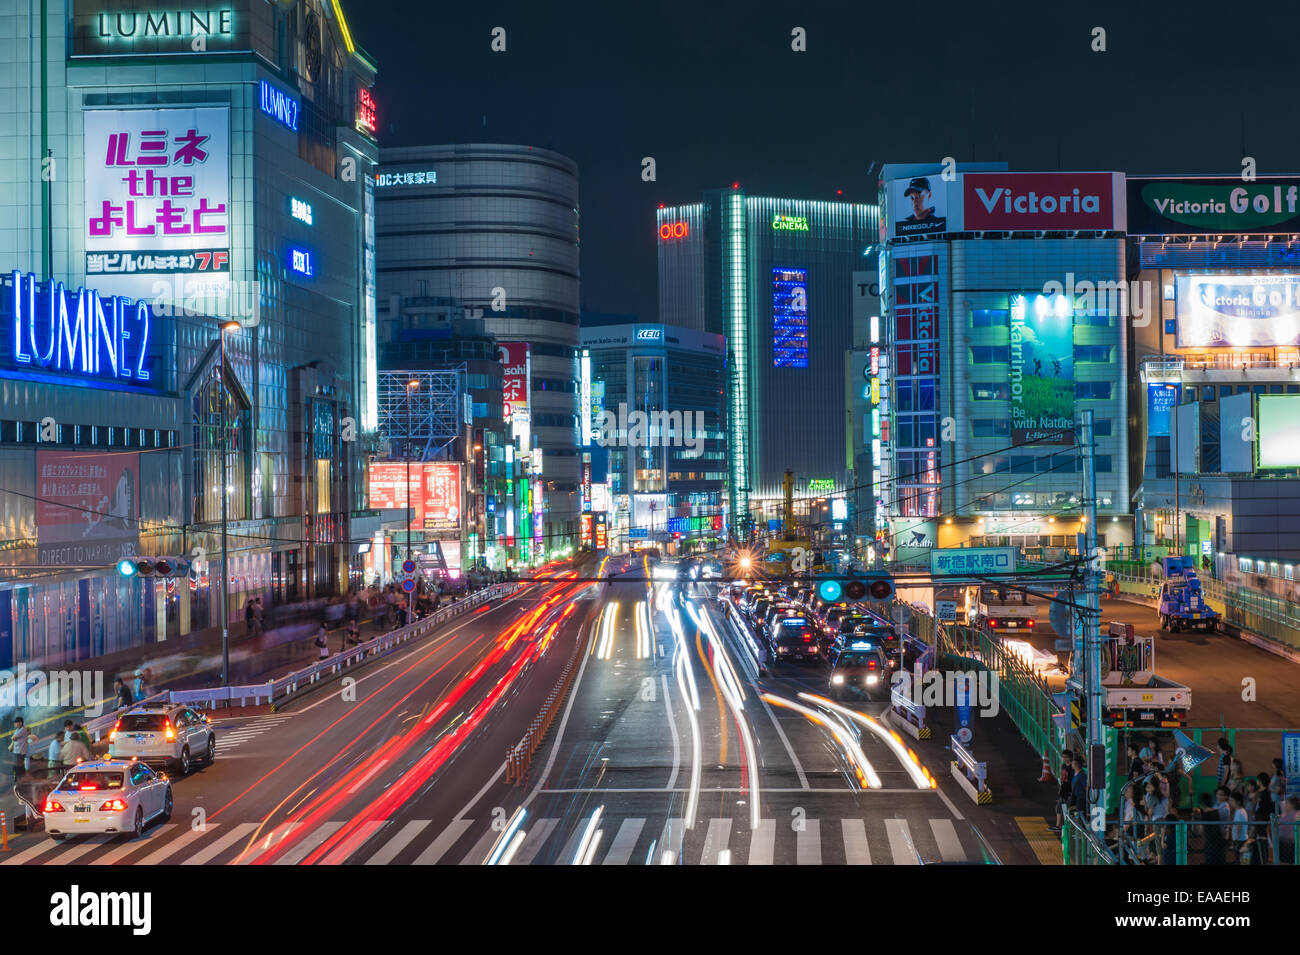 Shinjuku with traffic on Yasukuni Dori Street, and Kabukicho entertainment district at night, Tokyo - Japan Stock Photo